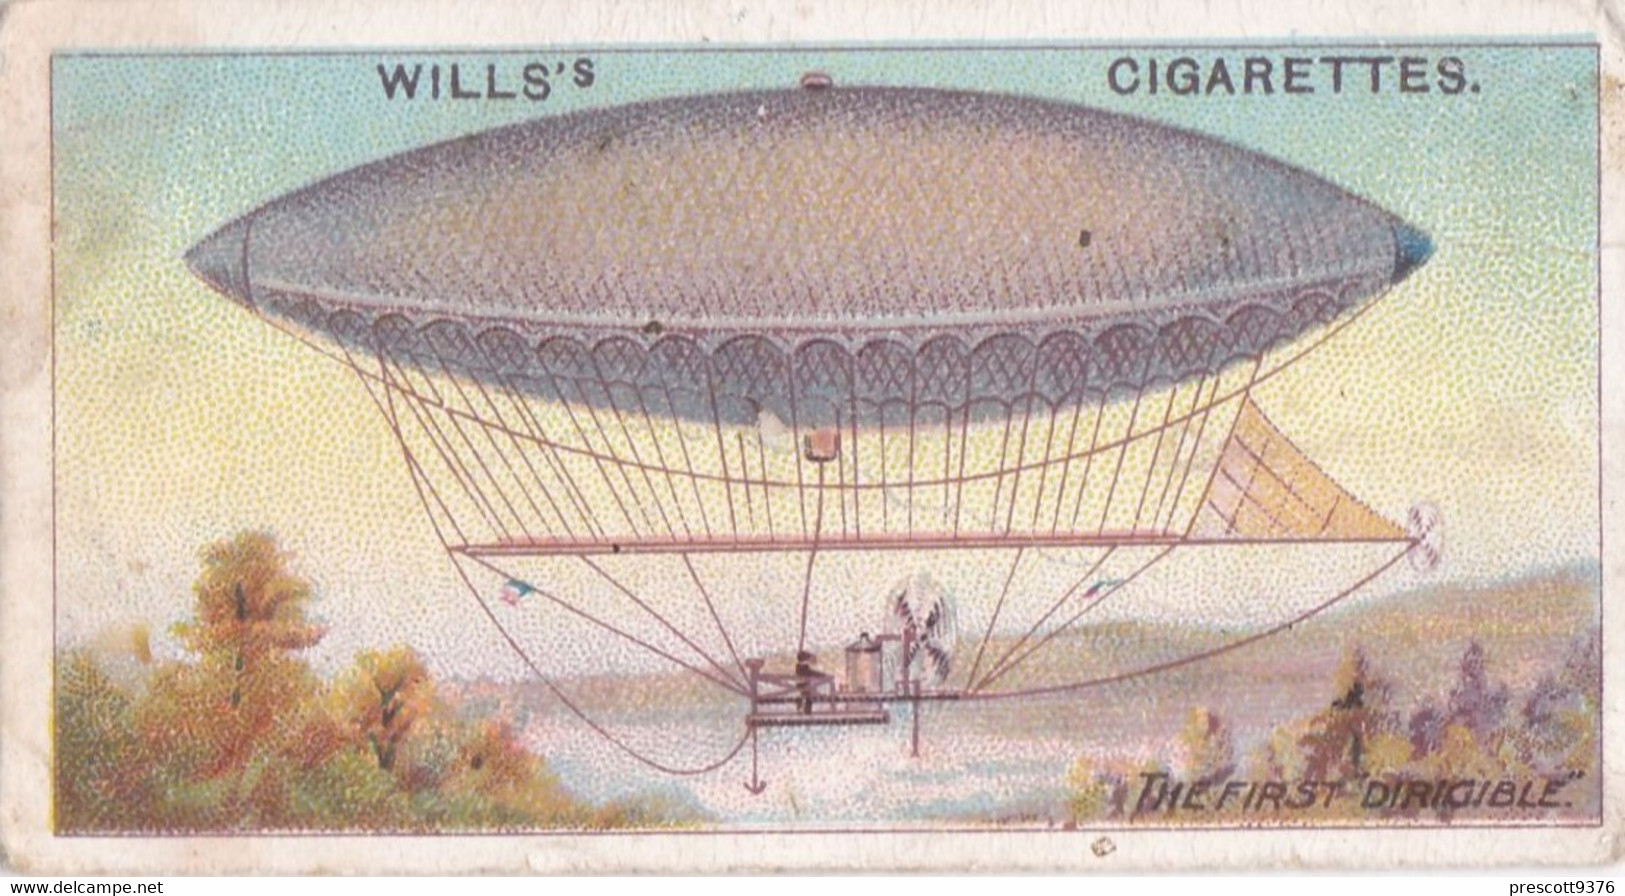 AVIATION 1910  -   6 1st Dirigible 1852  - Wills Cigarette Card - Original  - Antique - Airship - Balloon - Wills